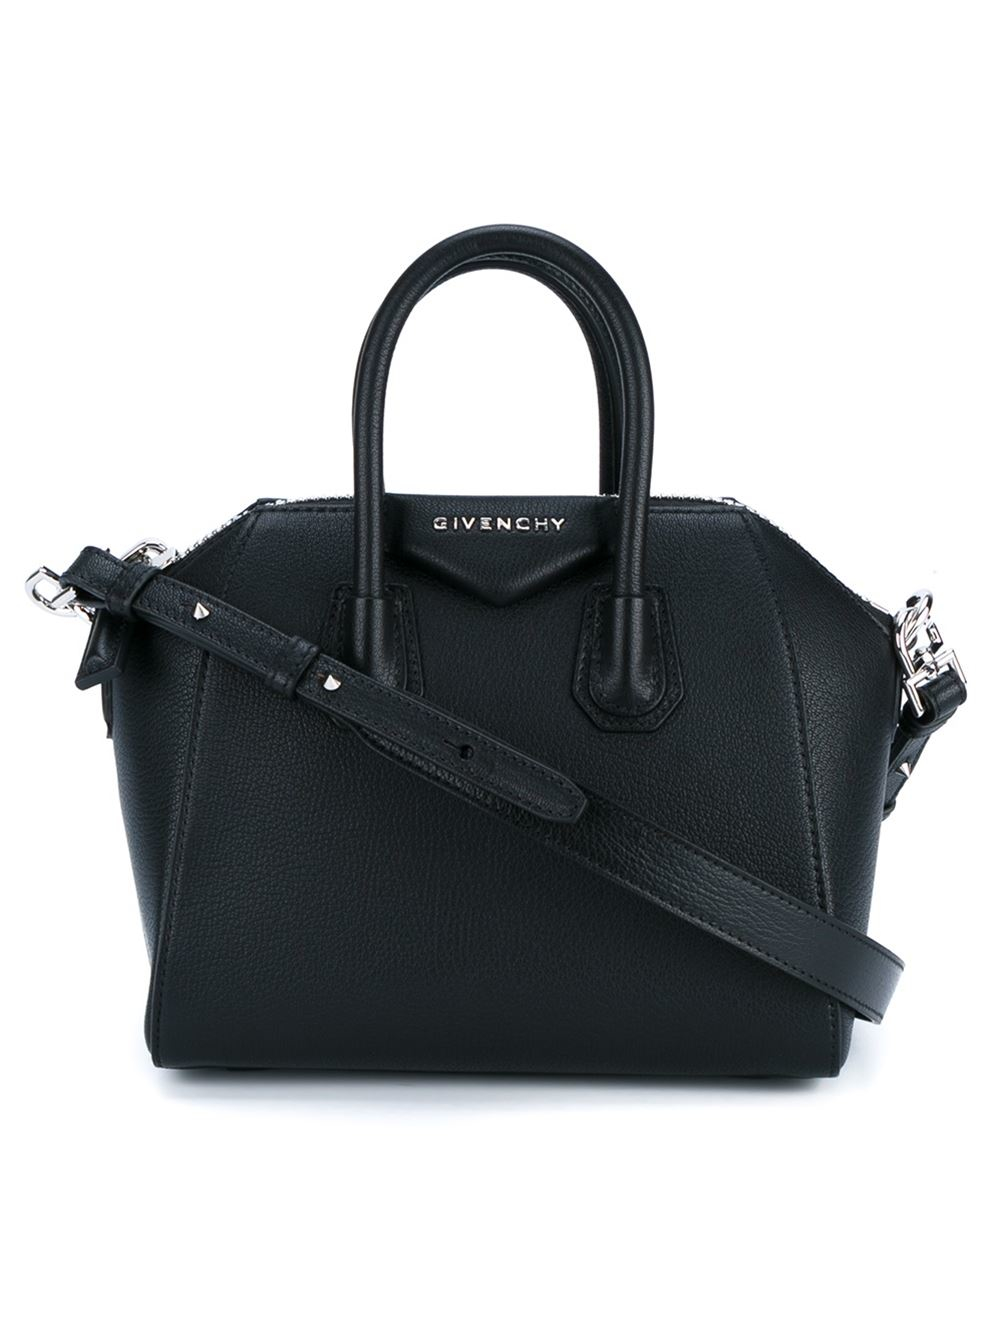 Givenchy Mini Antigona Bag in Black | Lyst